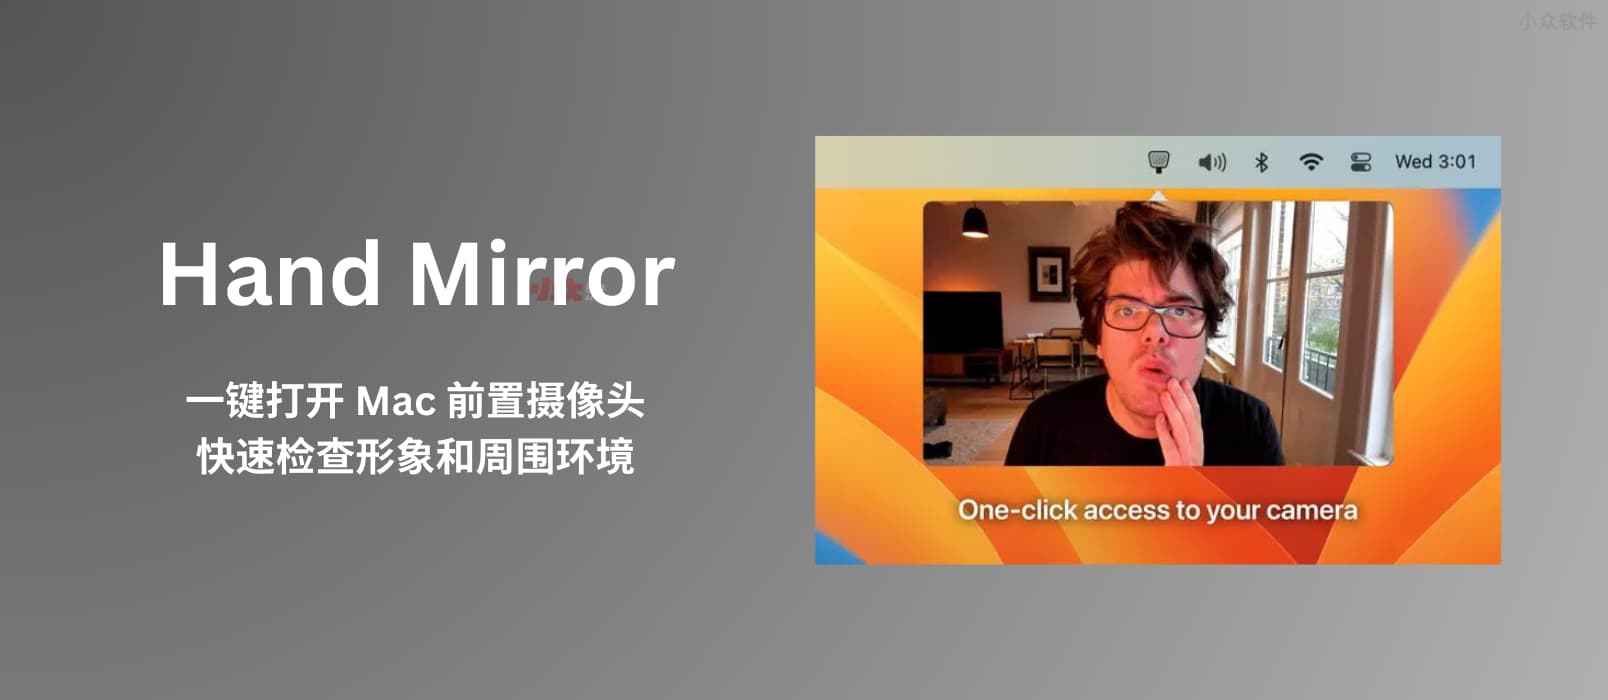 Hand Mirror – 一键打开 Mac 前置摄像头，快速检查形象和周围环境